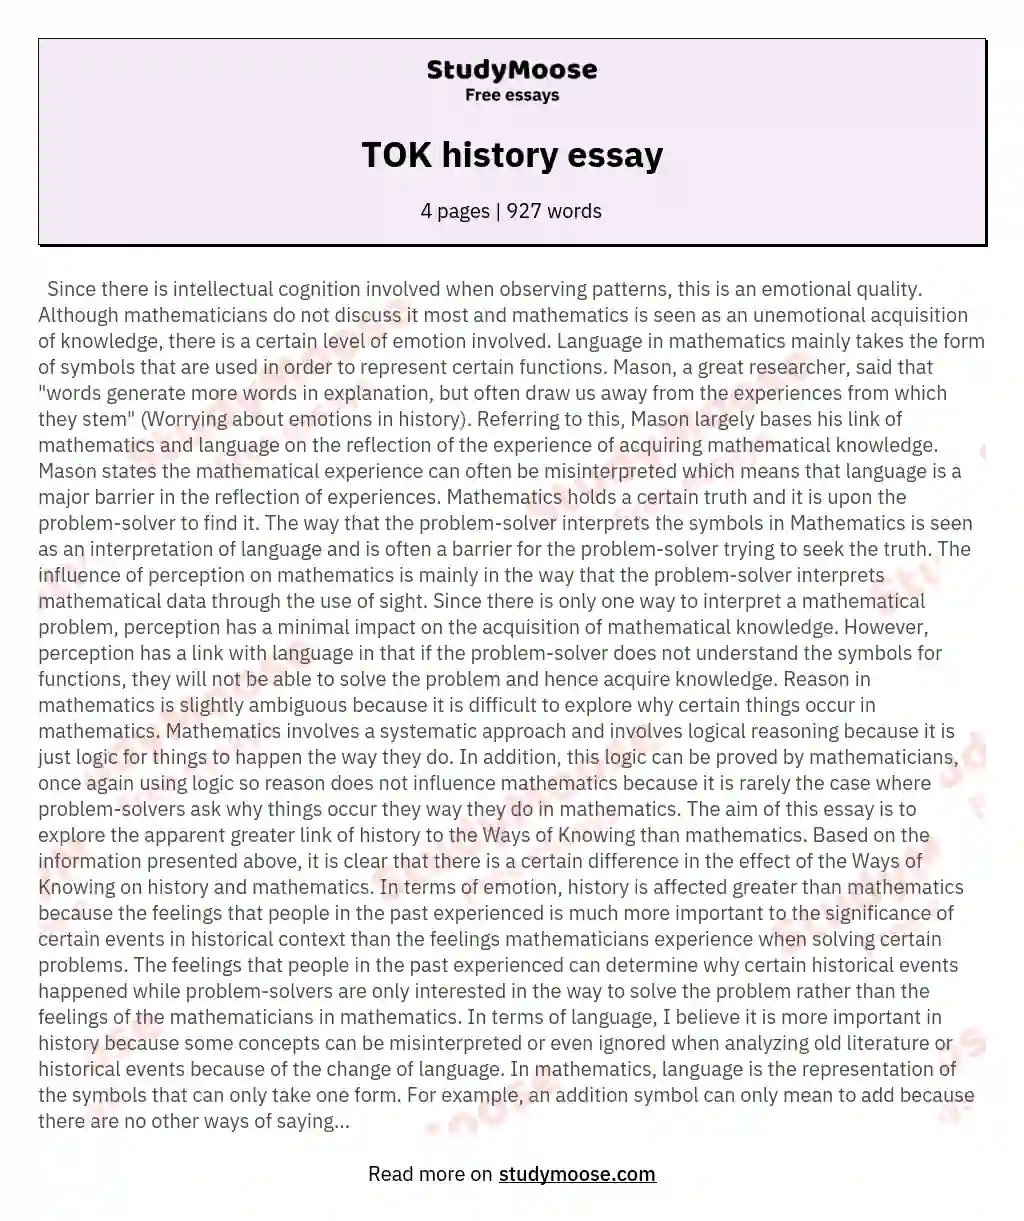 TOK history essay